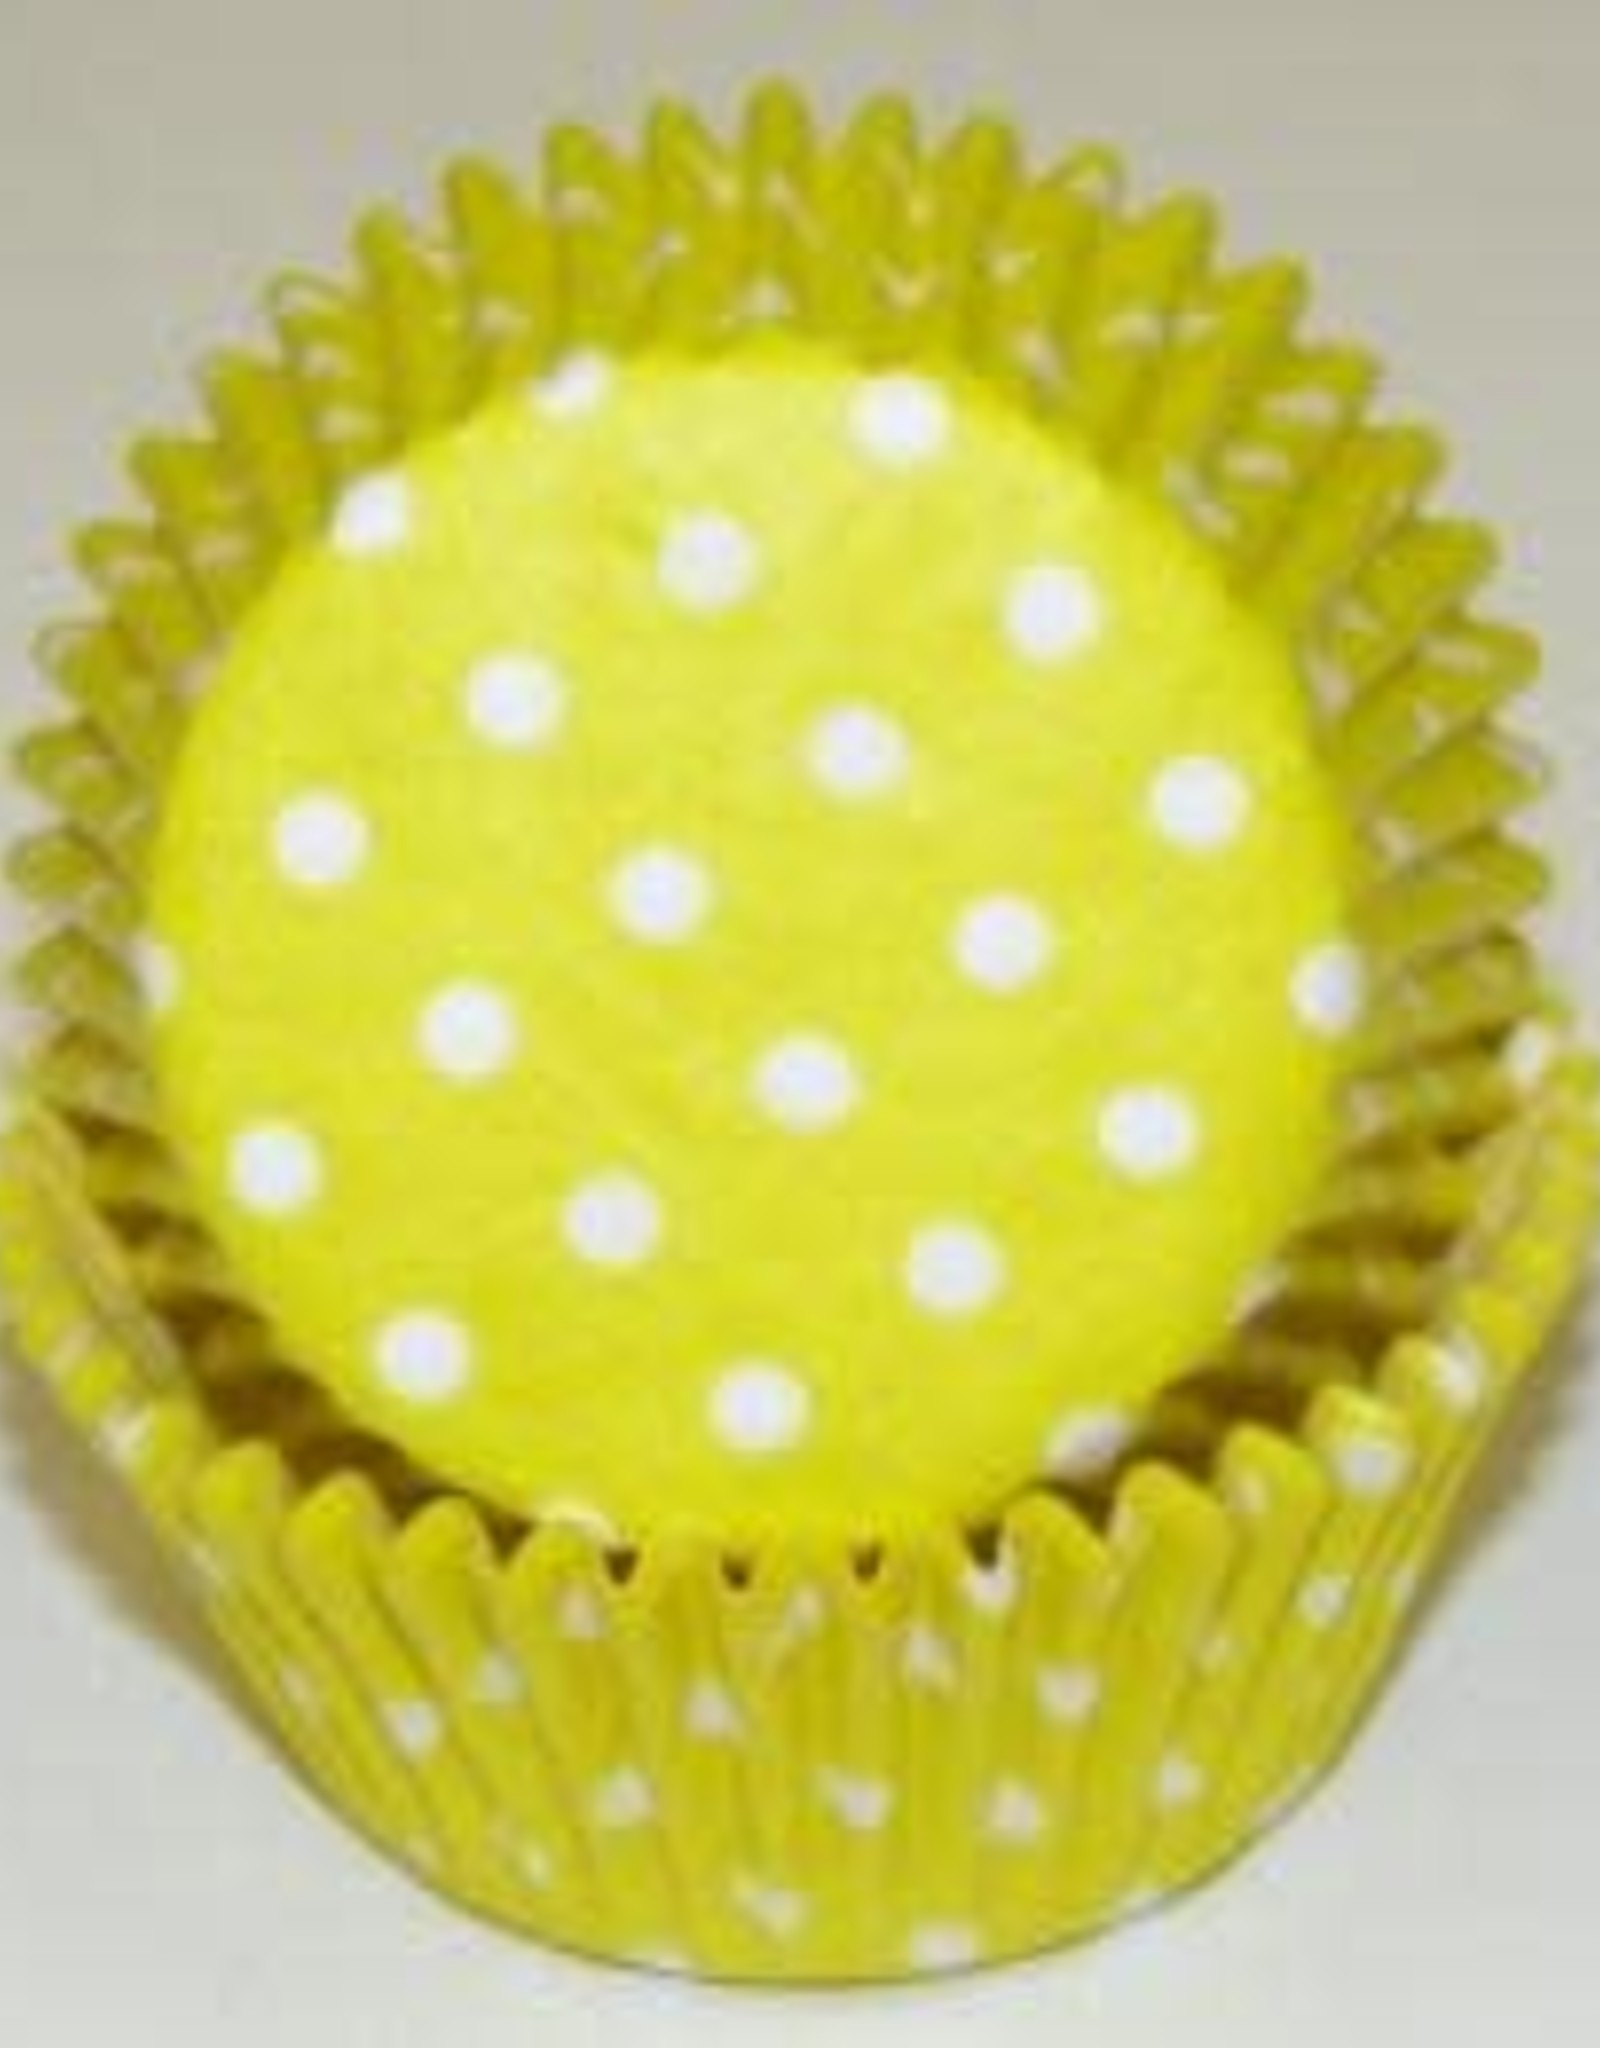 Yellow Polka Dot Baking Cups (30-35ct)